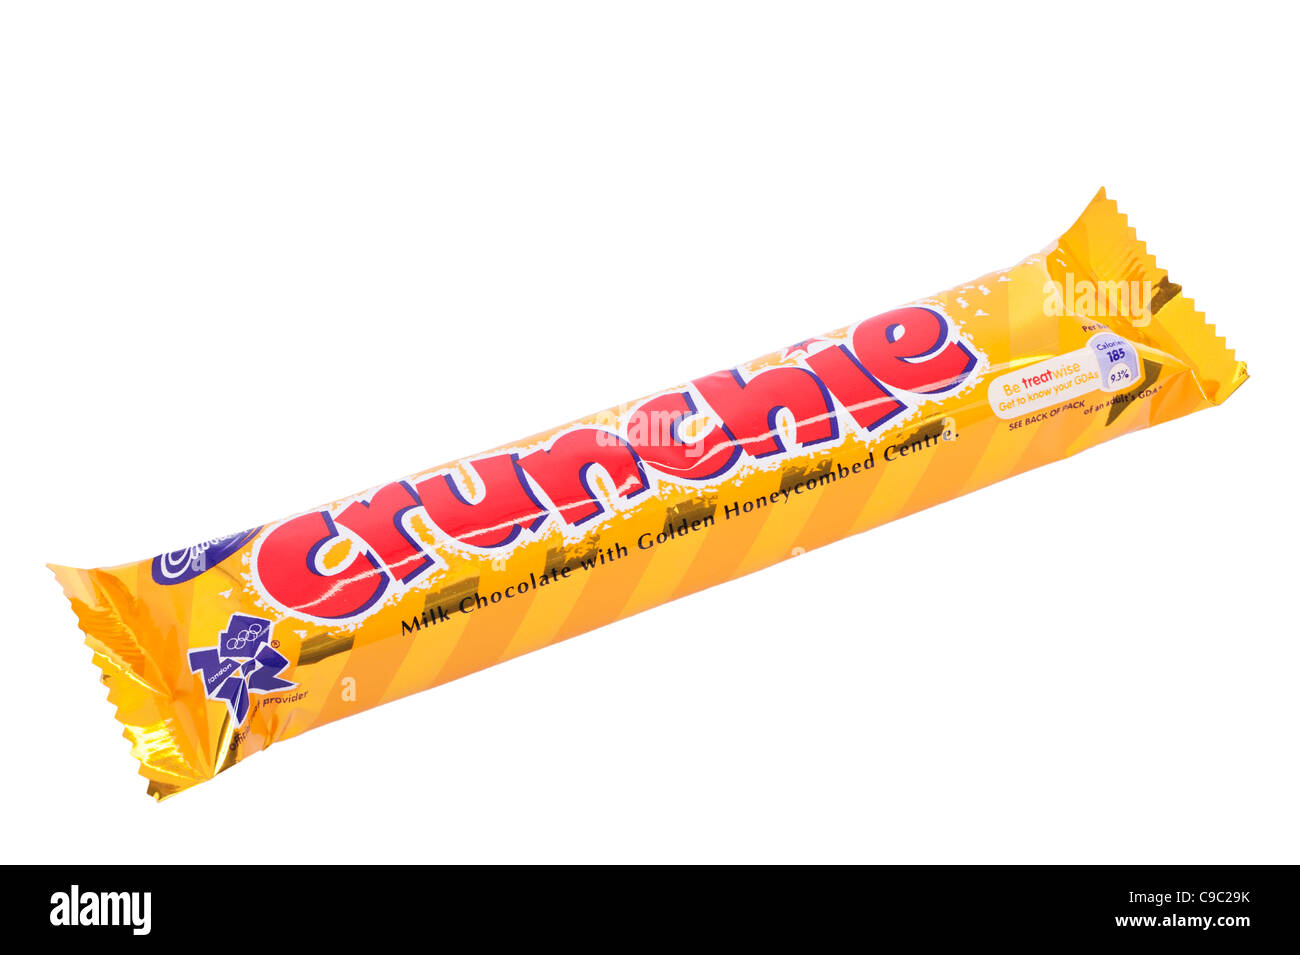 A Cadbury Crunchie chocolate bar on a white background Stock Photo